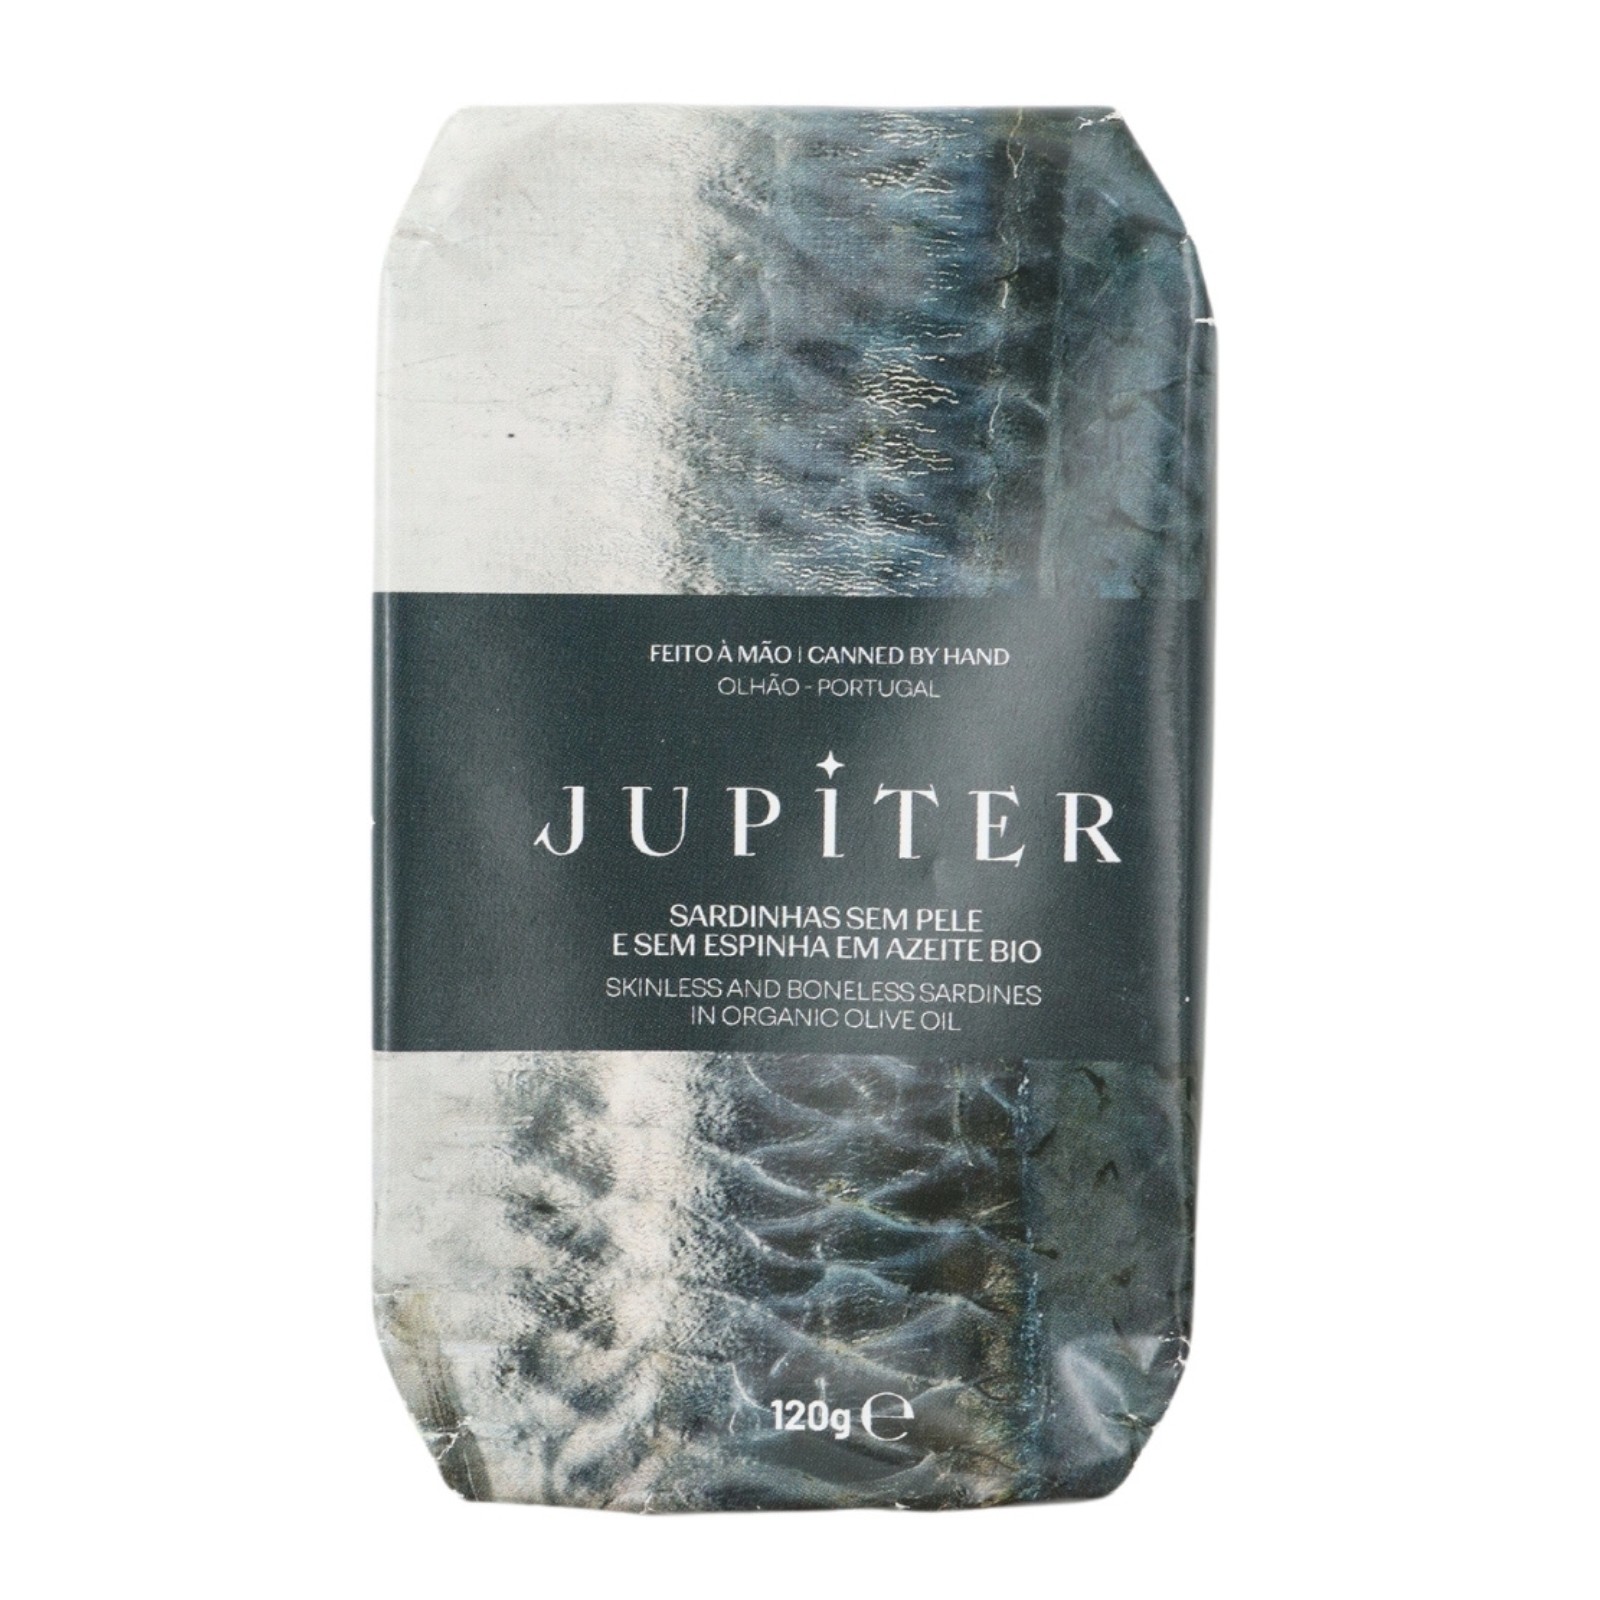 Jupiter Sardine disossate e senza pelle in olio di oliva biologico